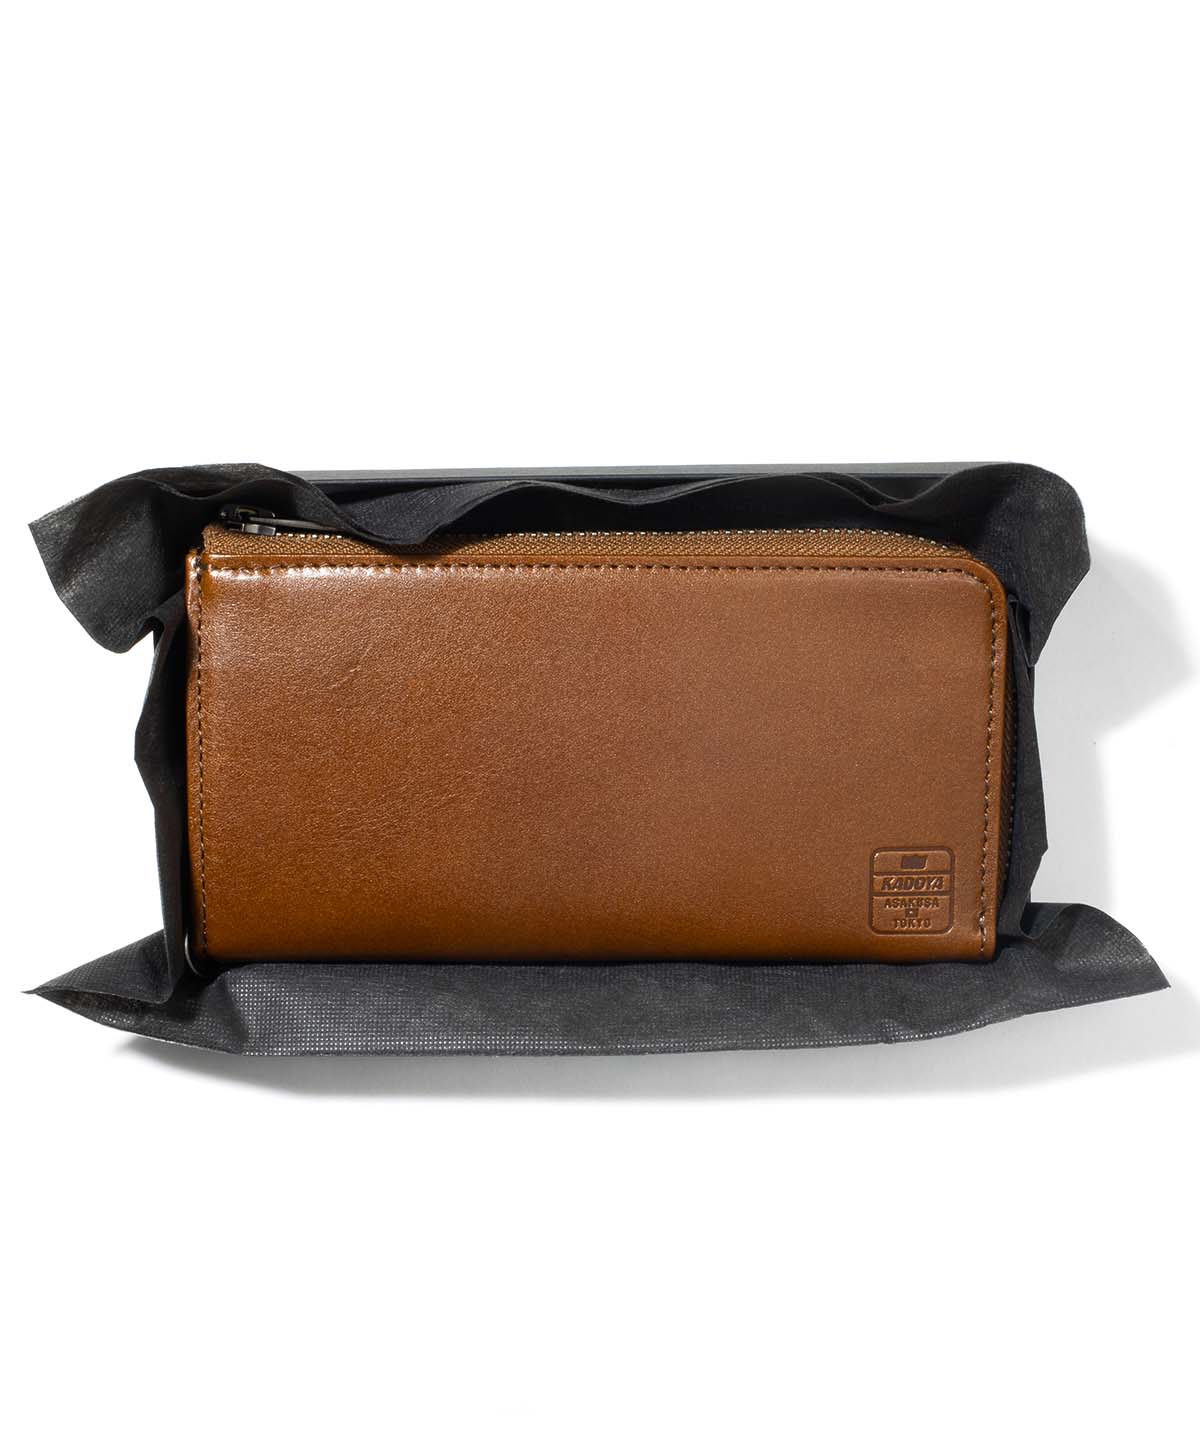 L zip dompet kompak / coklat